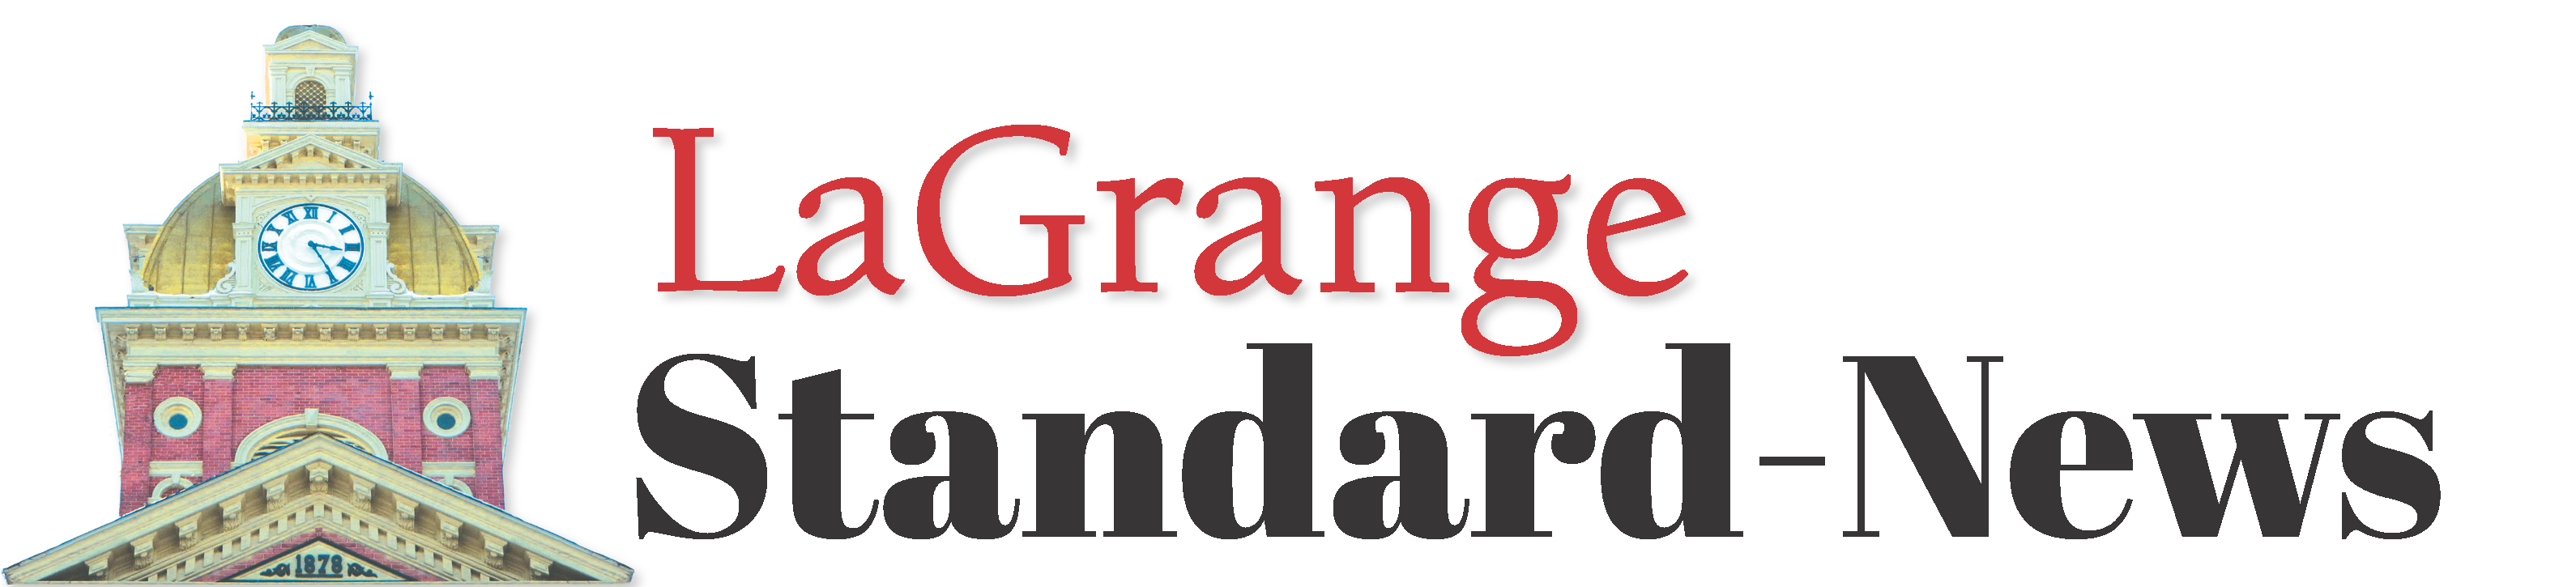 LaGrange Standard and News